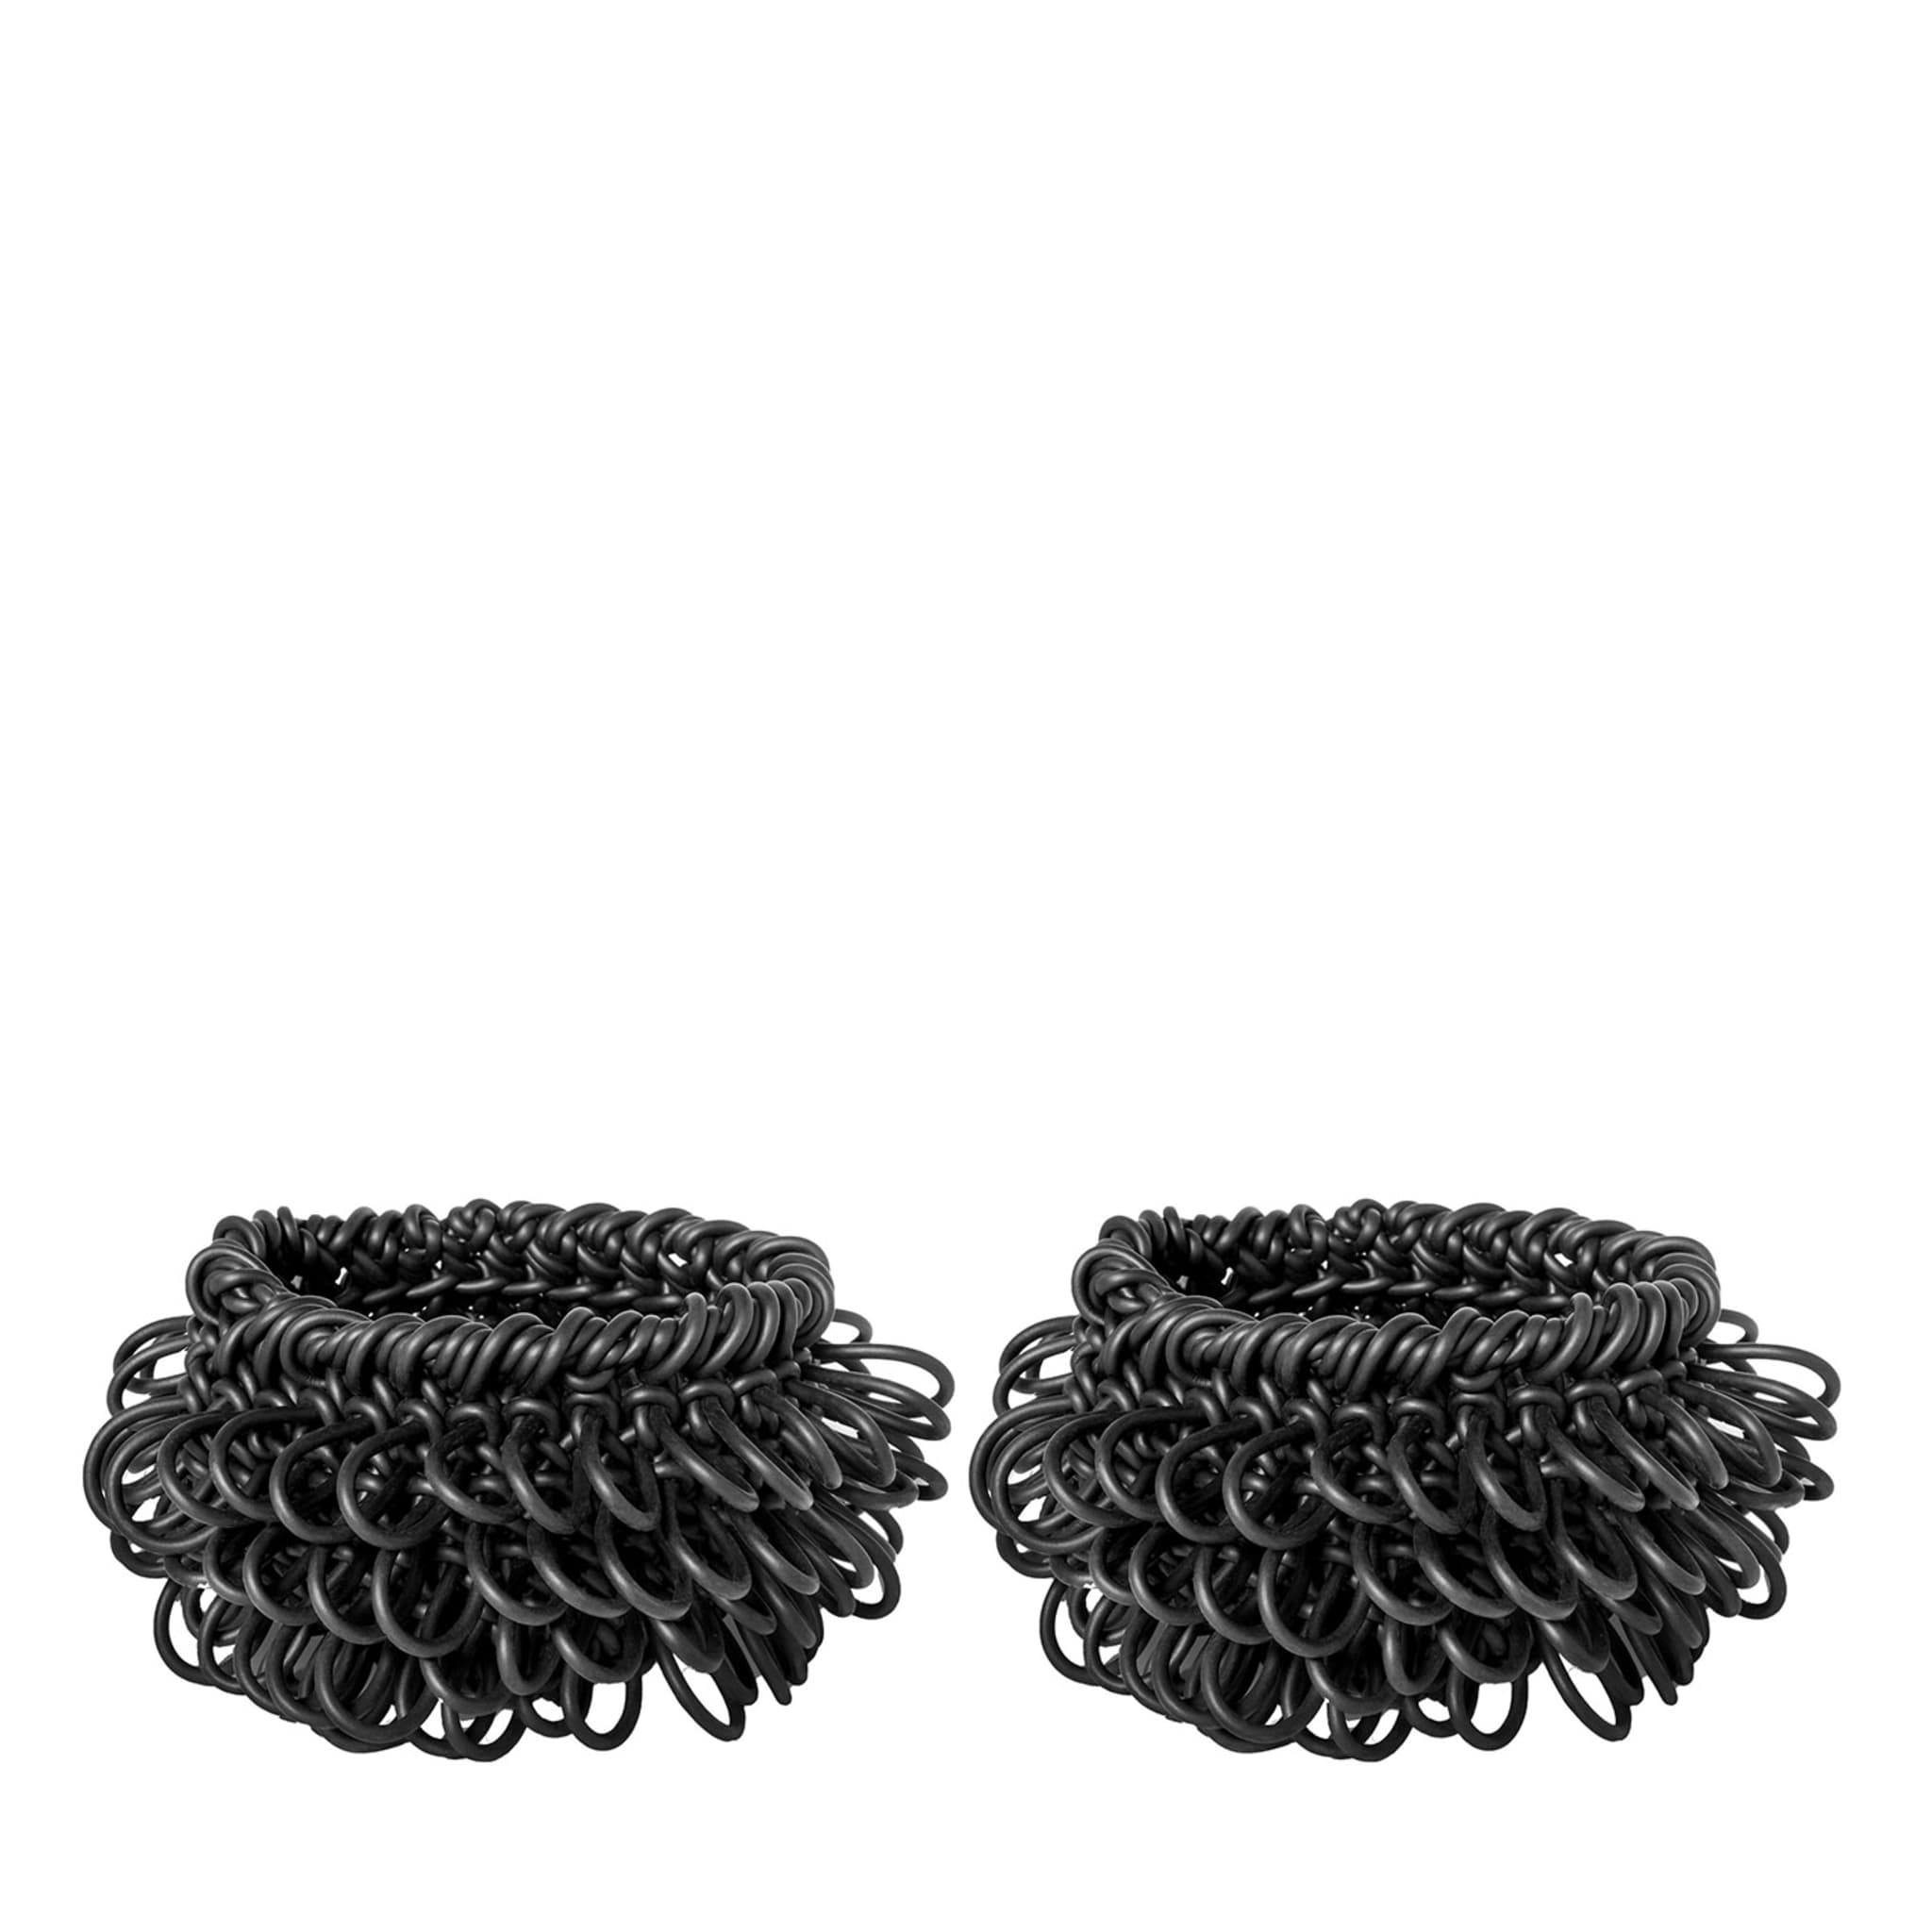 Set of 2 Ricami Black Baskets #2 by Rosanna Contadini - Main view